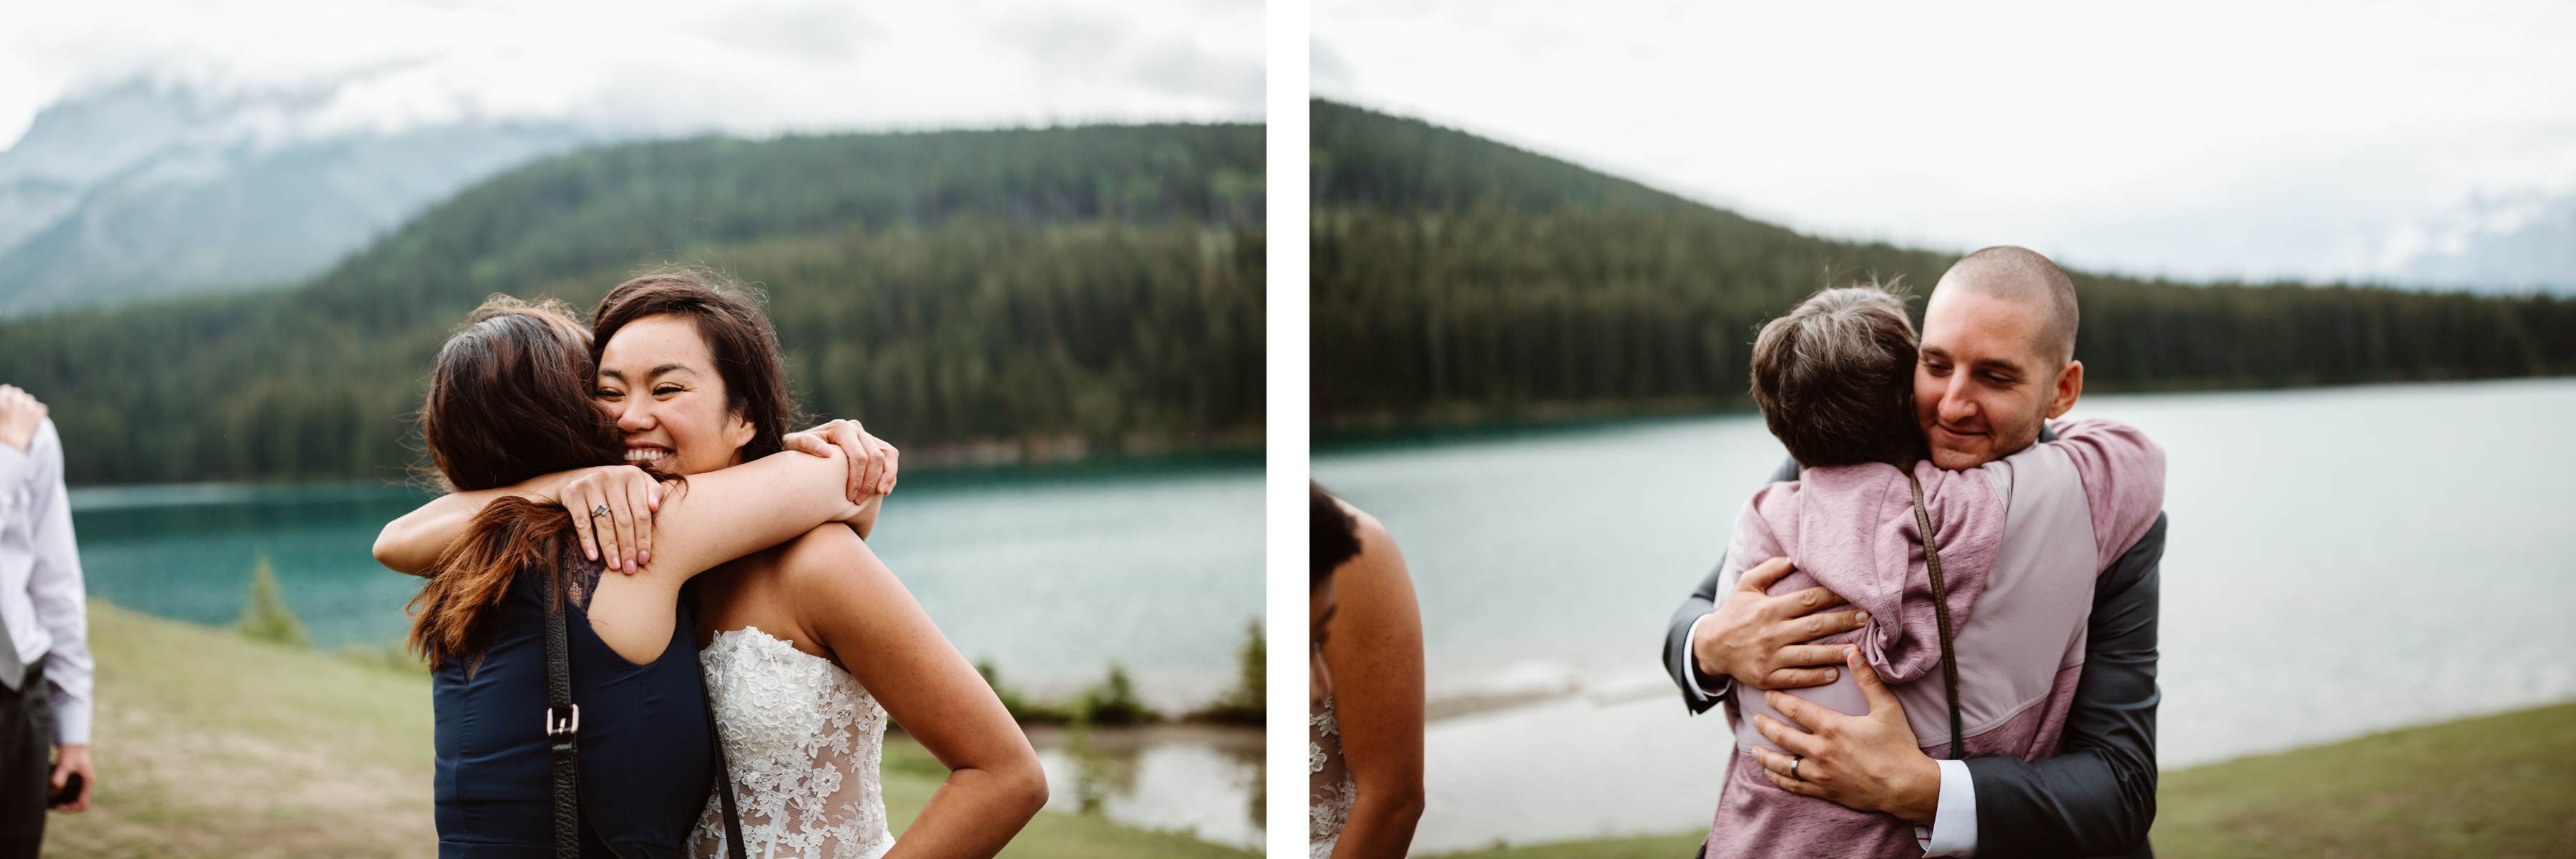 Intimate Wedding Photographers in Banff National Park - Photo 36